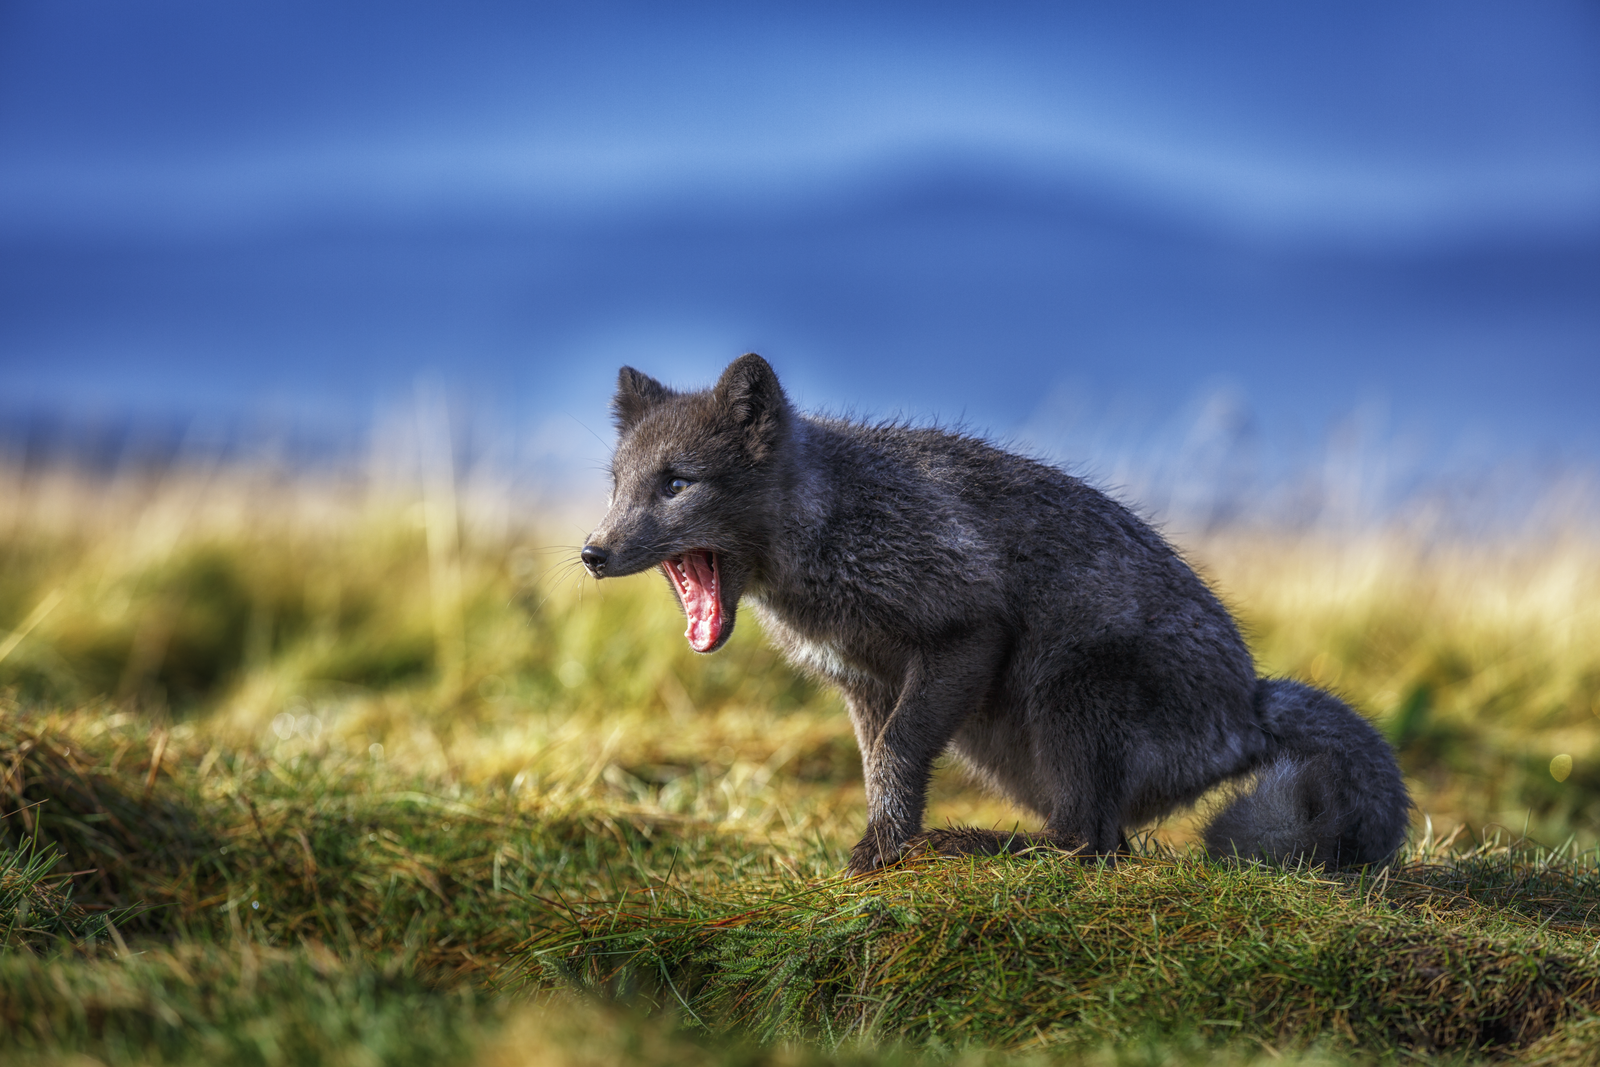 Arctic fox in Iceland